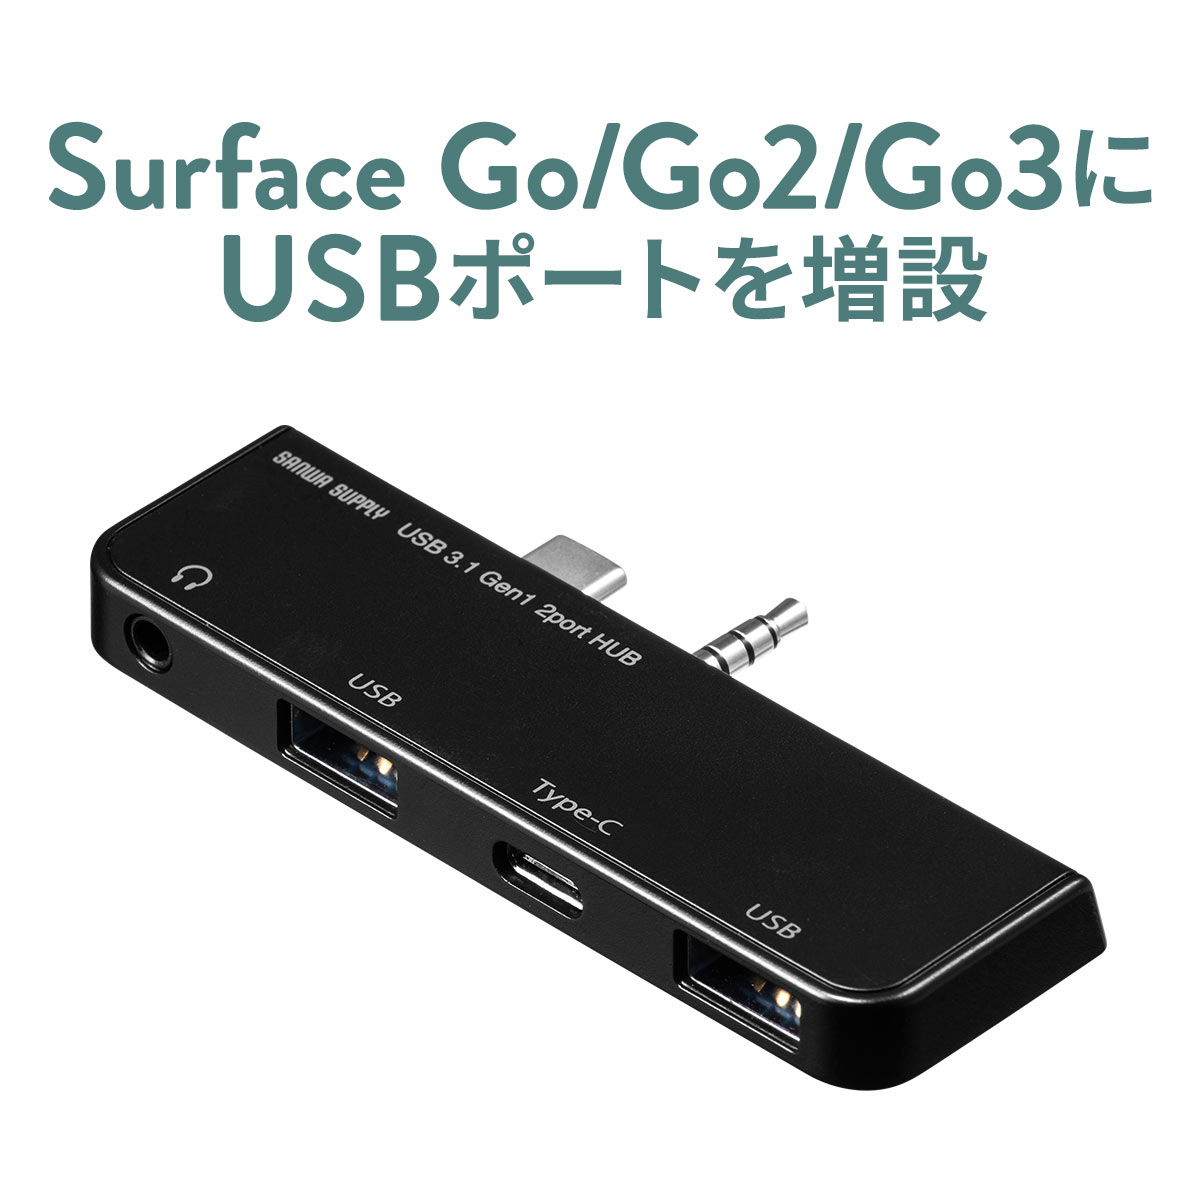 Surface GoEGo2EGo3p USB Type C nu USB3.1 3.0nu USBnu 3.5mmWbN T[tFX S[p Type-C ^CvC USB A USB3.1 Gen1 3.5mm4Ƀ~jWbN wbhzWbN hbLOXe[V oXp[